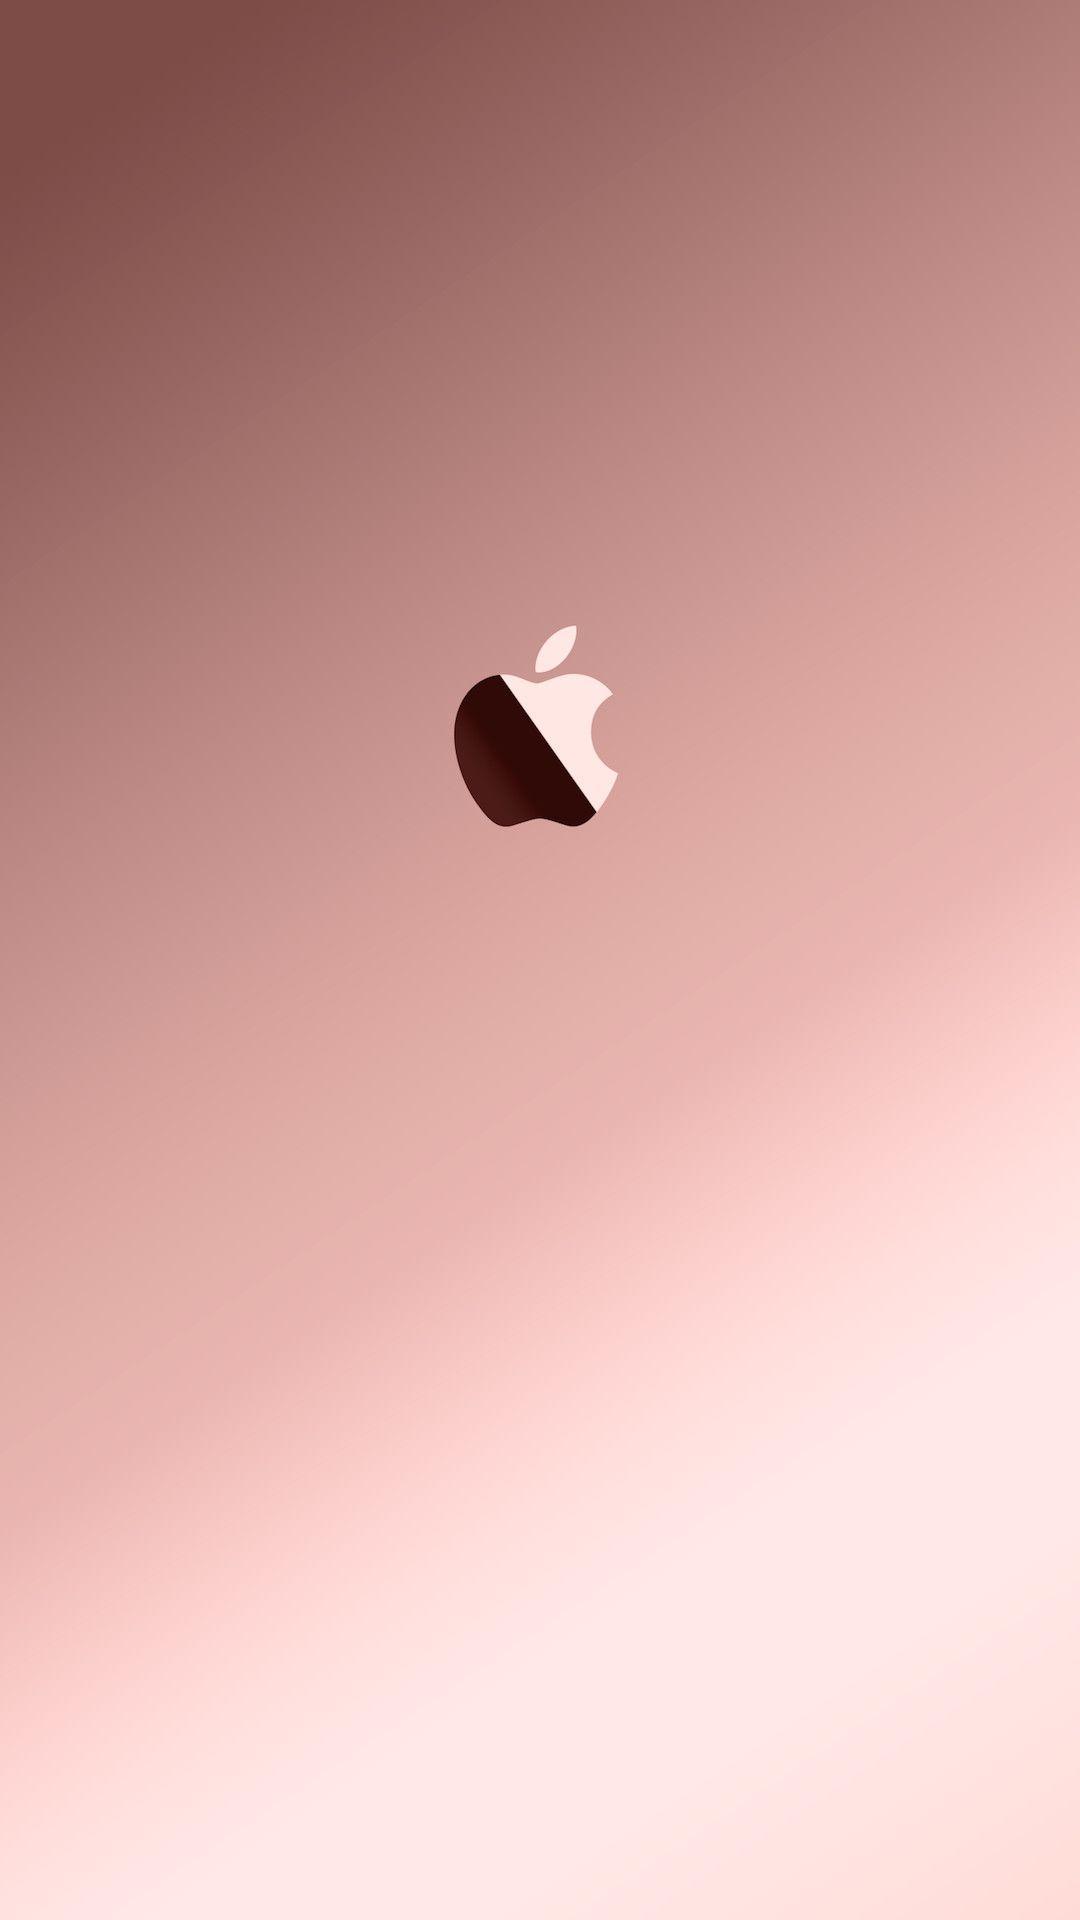 Inside Macbook Gold Apple Illustration Art Rose Gold iPad Wallpapers Free  Download